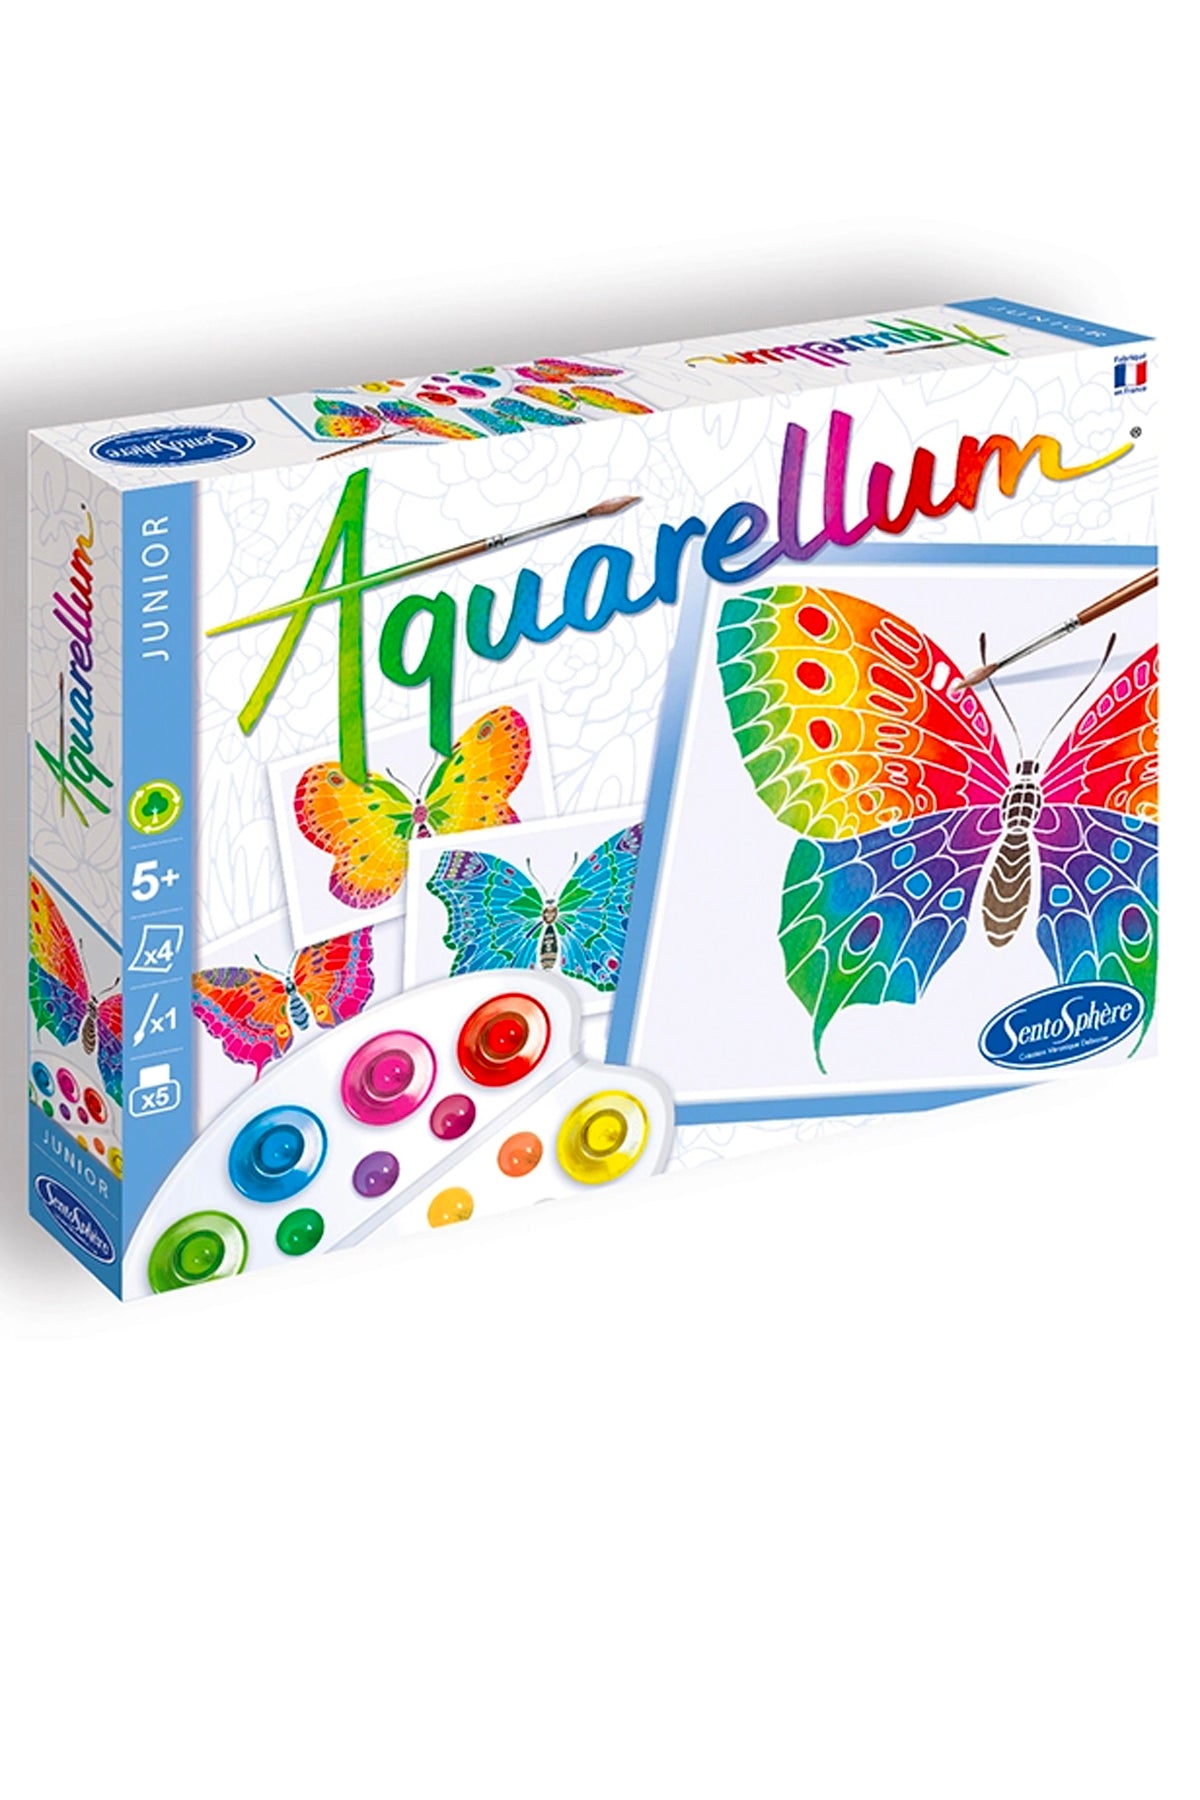 Aquarellum Butterflies aqua painting